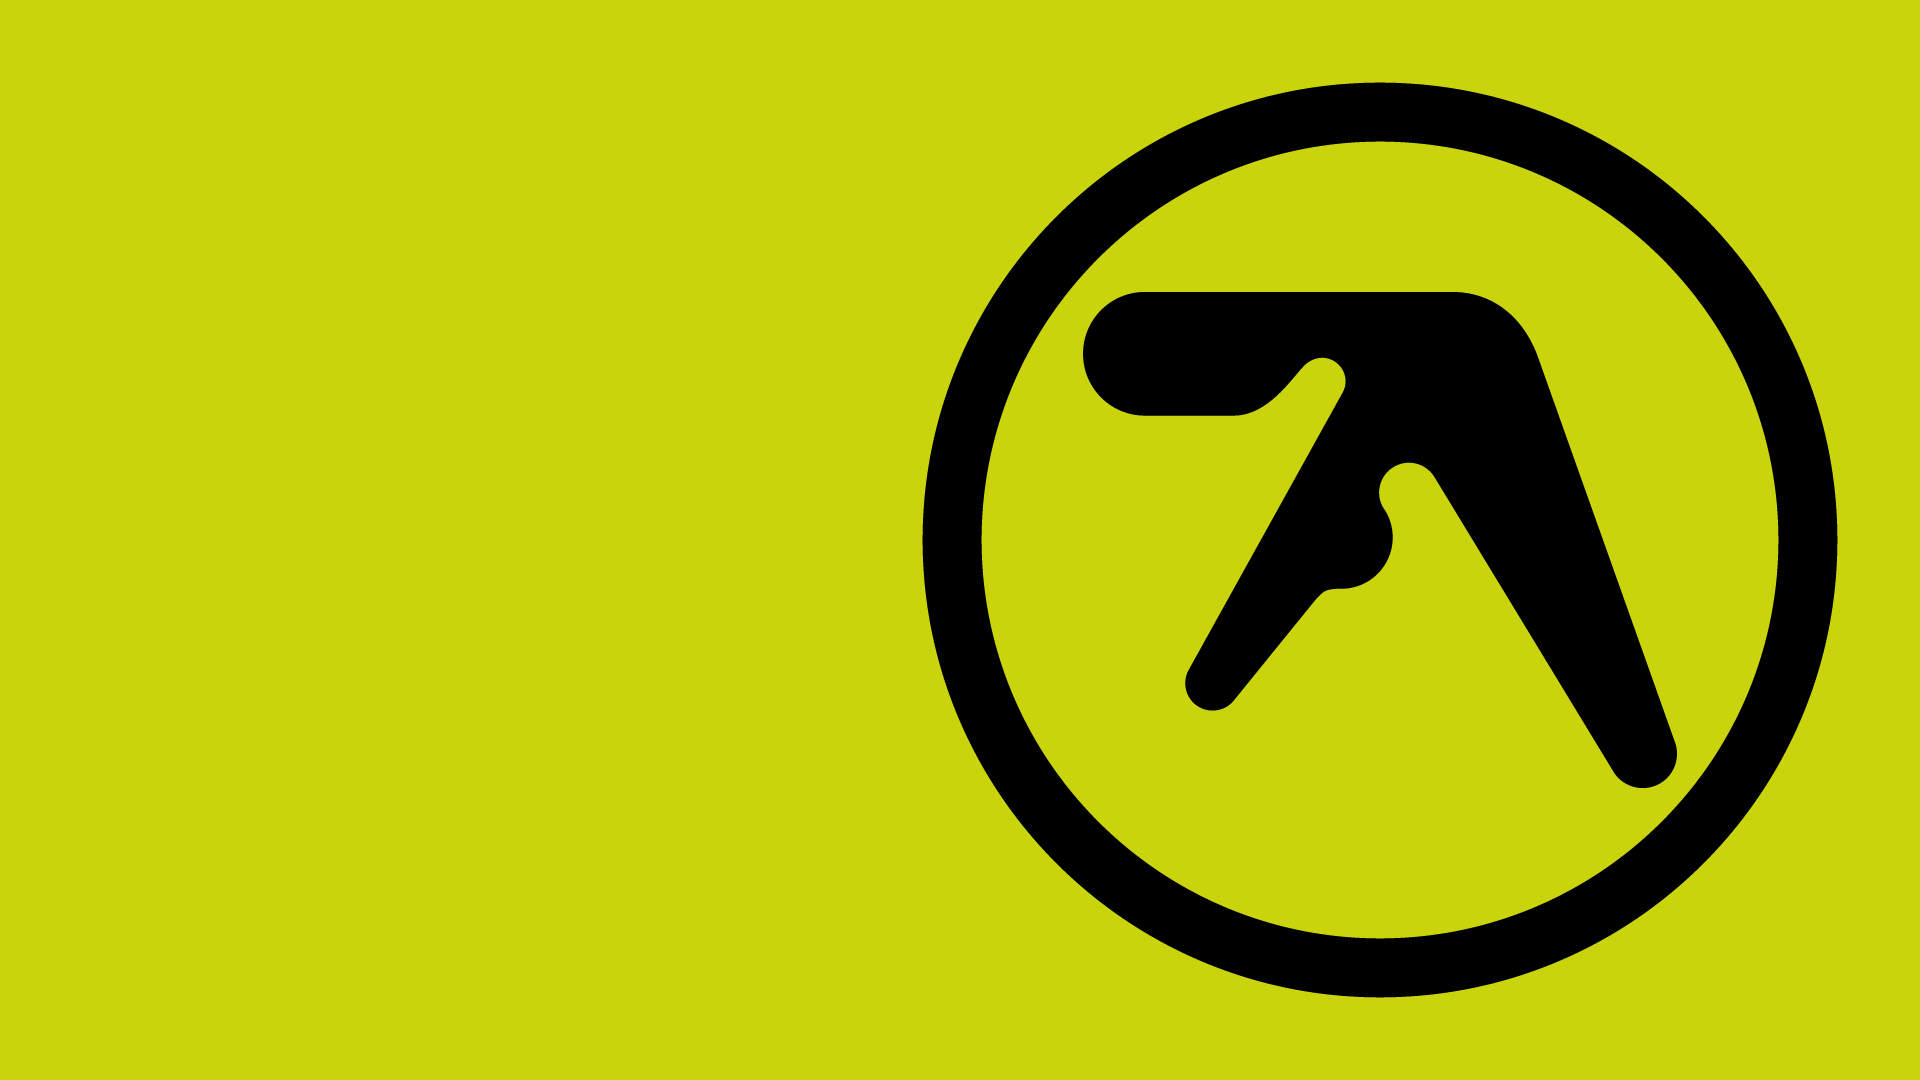 General 1920x1080 Aphex Twin music simple background minimalism circle yellow background yellow DJ